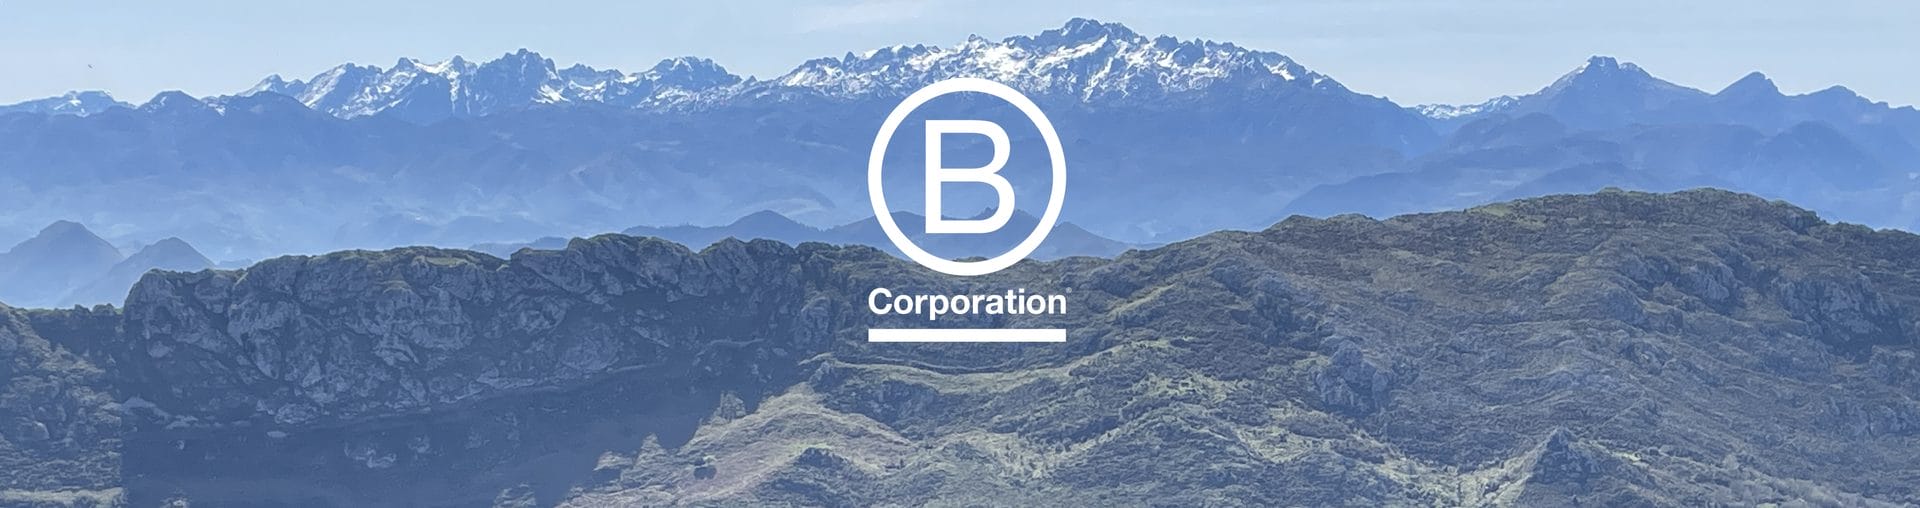 B Corp Certification - Earthology